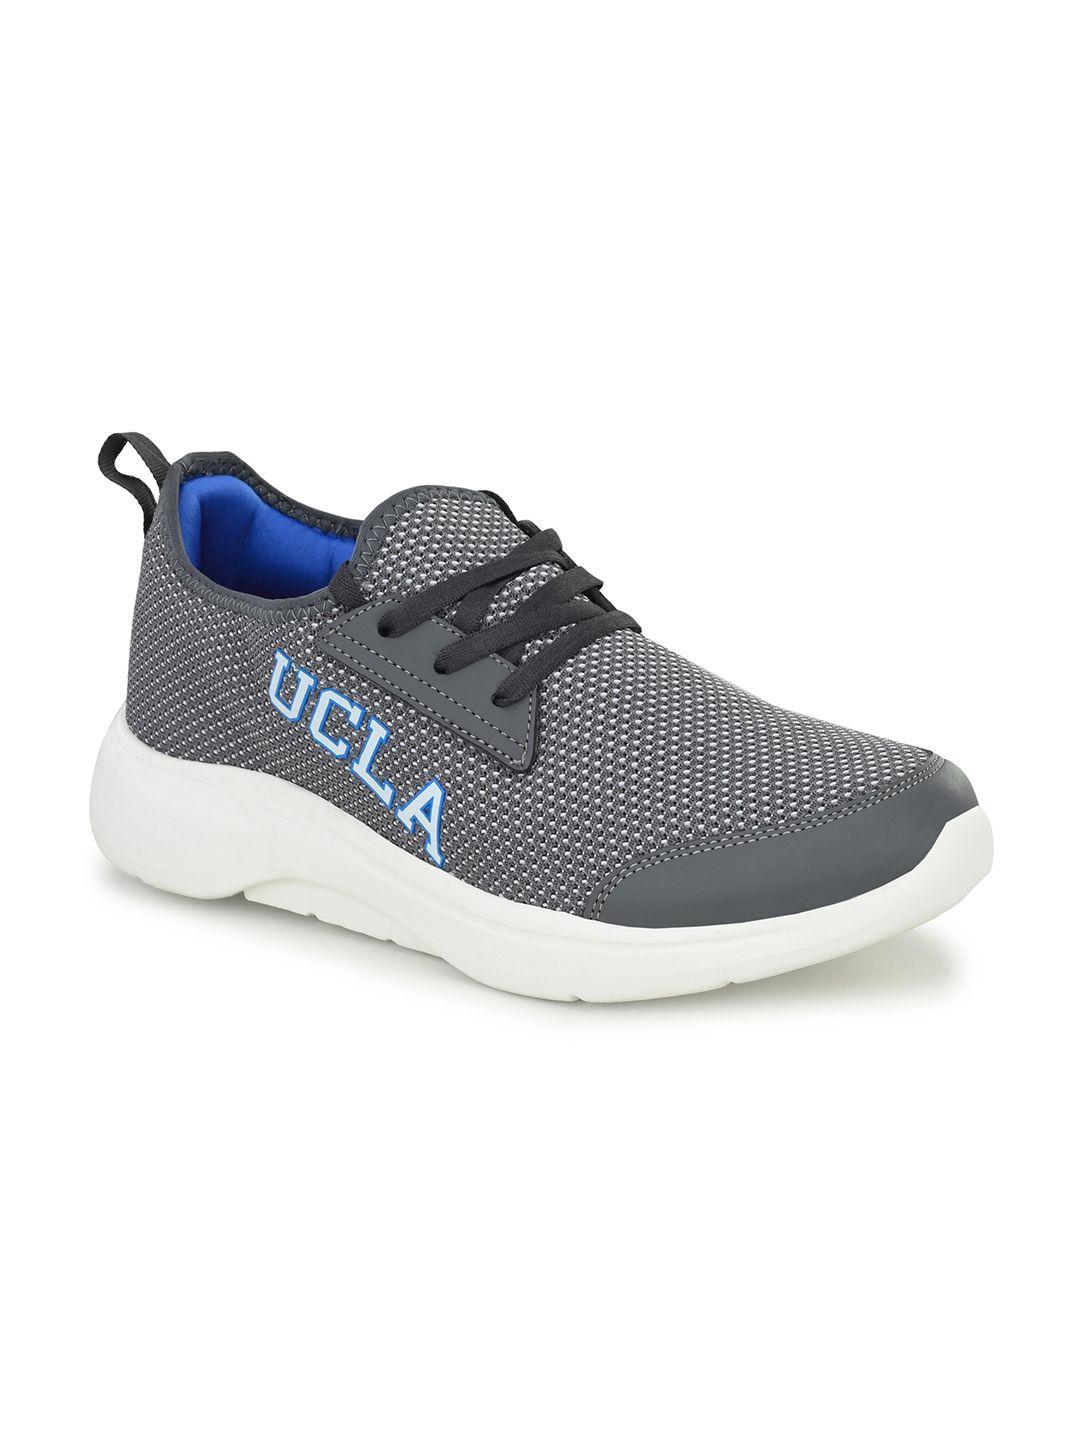 ucla men grey mesh running non-marking shoes